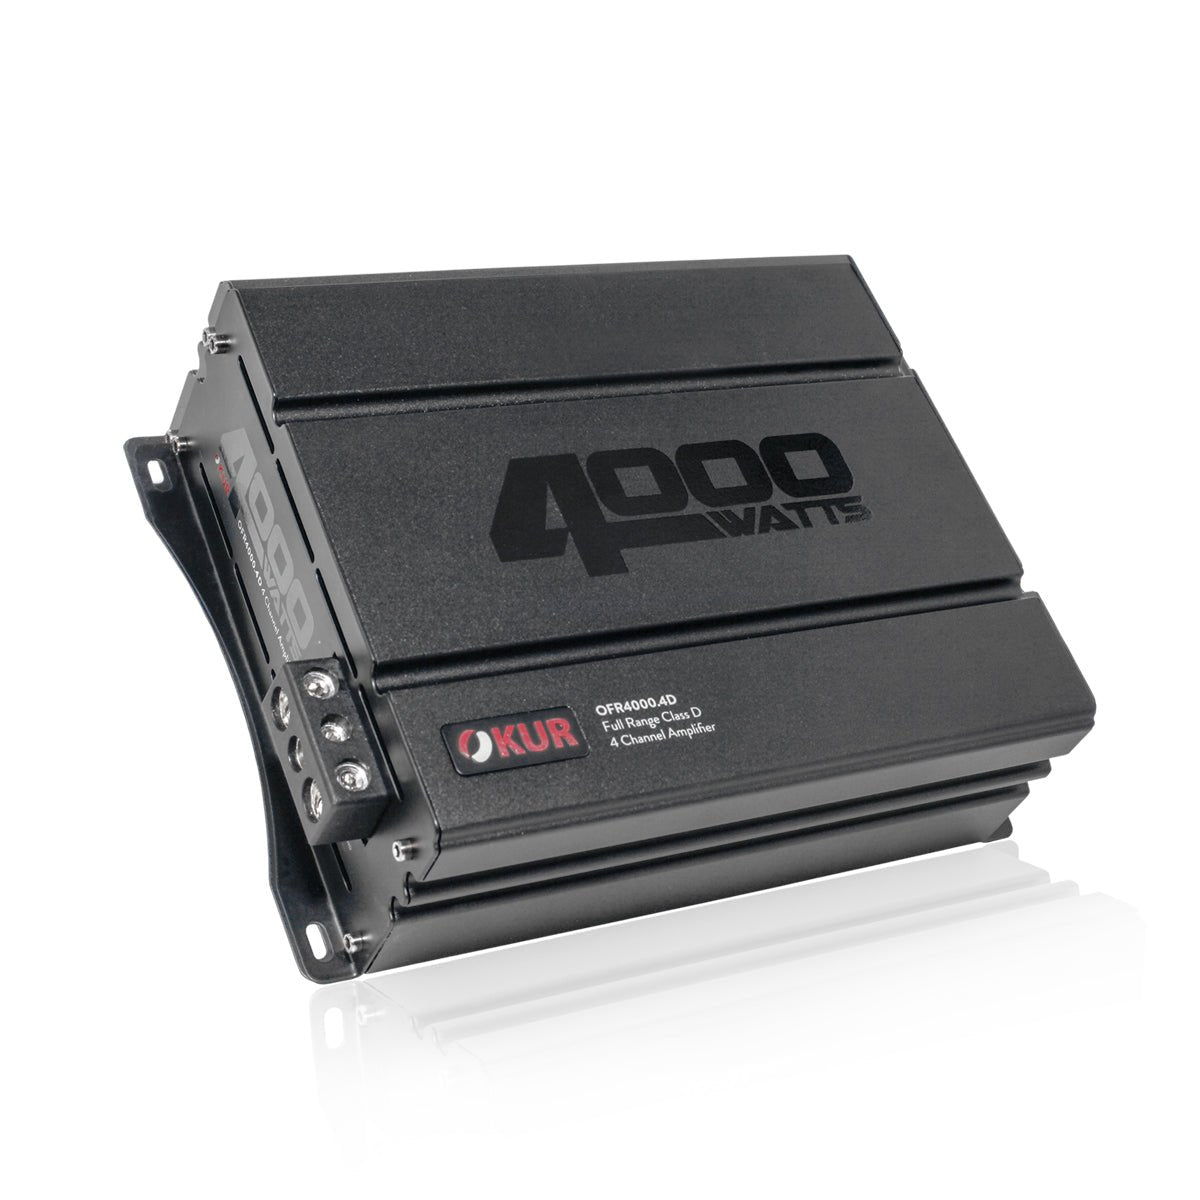 Amplificador OKUR OFR4000.4D